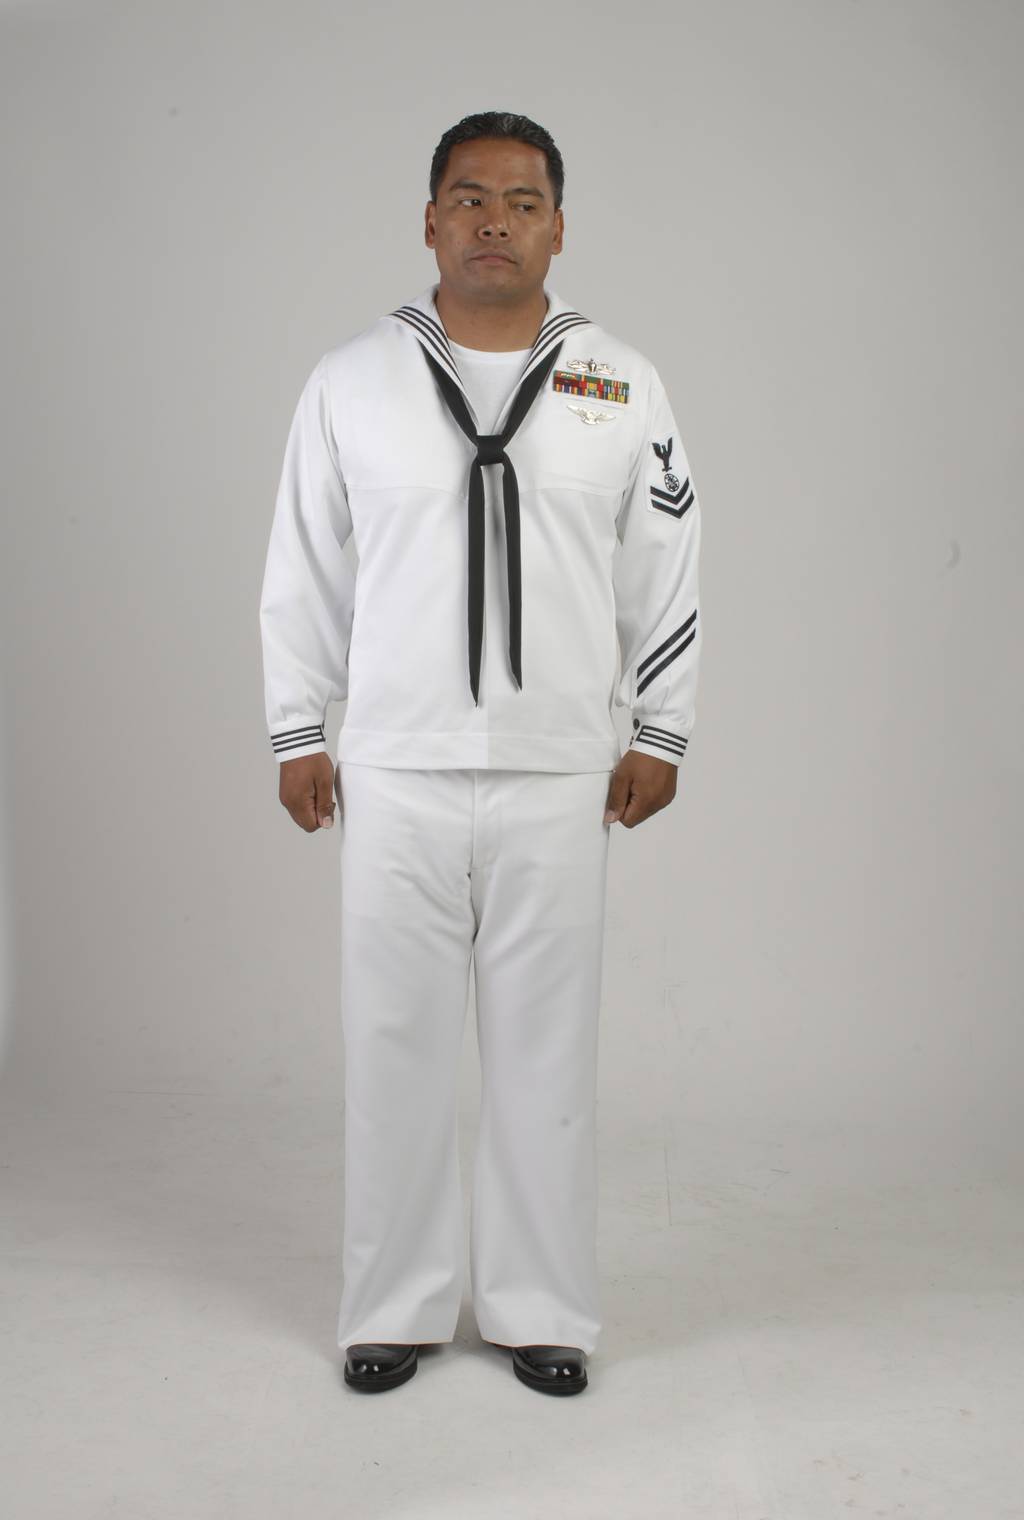 navy white uniforms